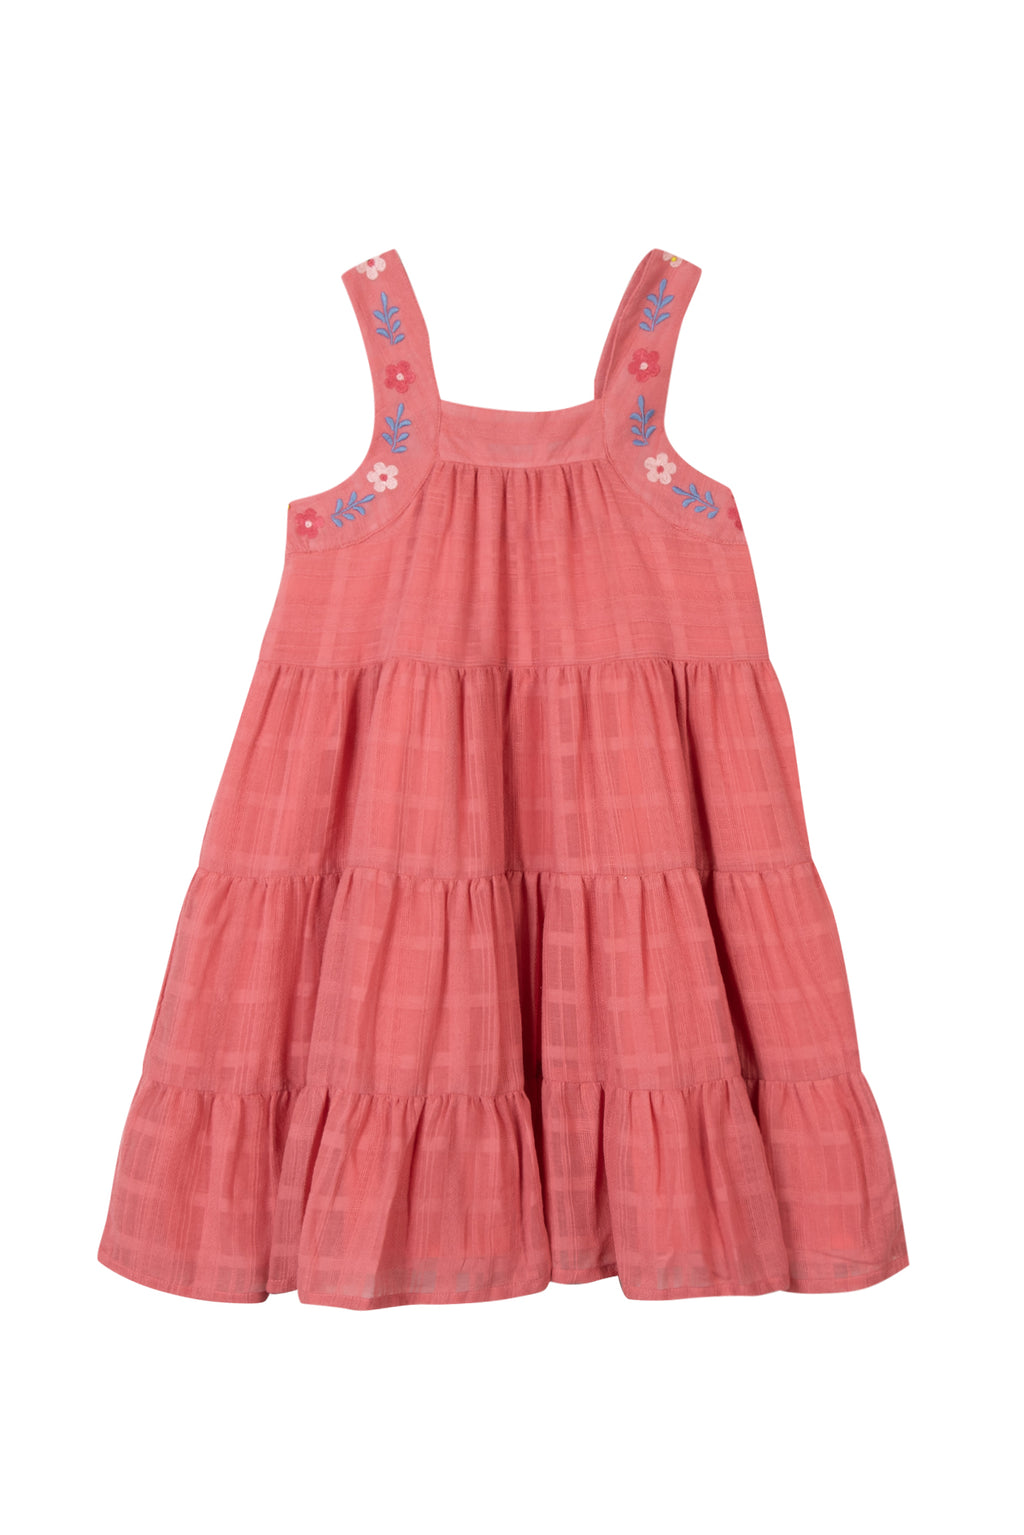 Dress - Pink chasuble